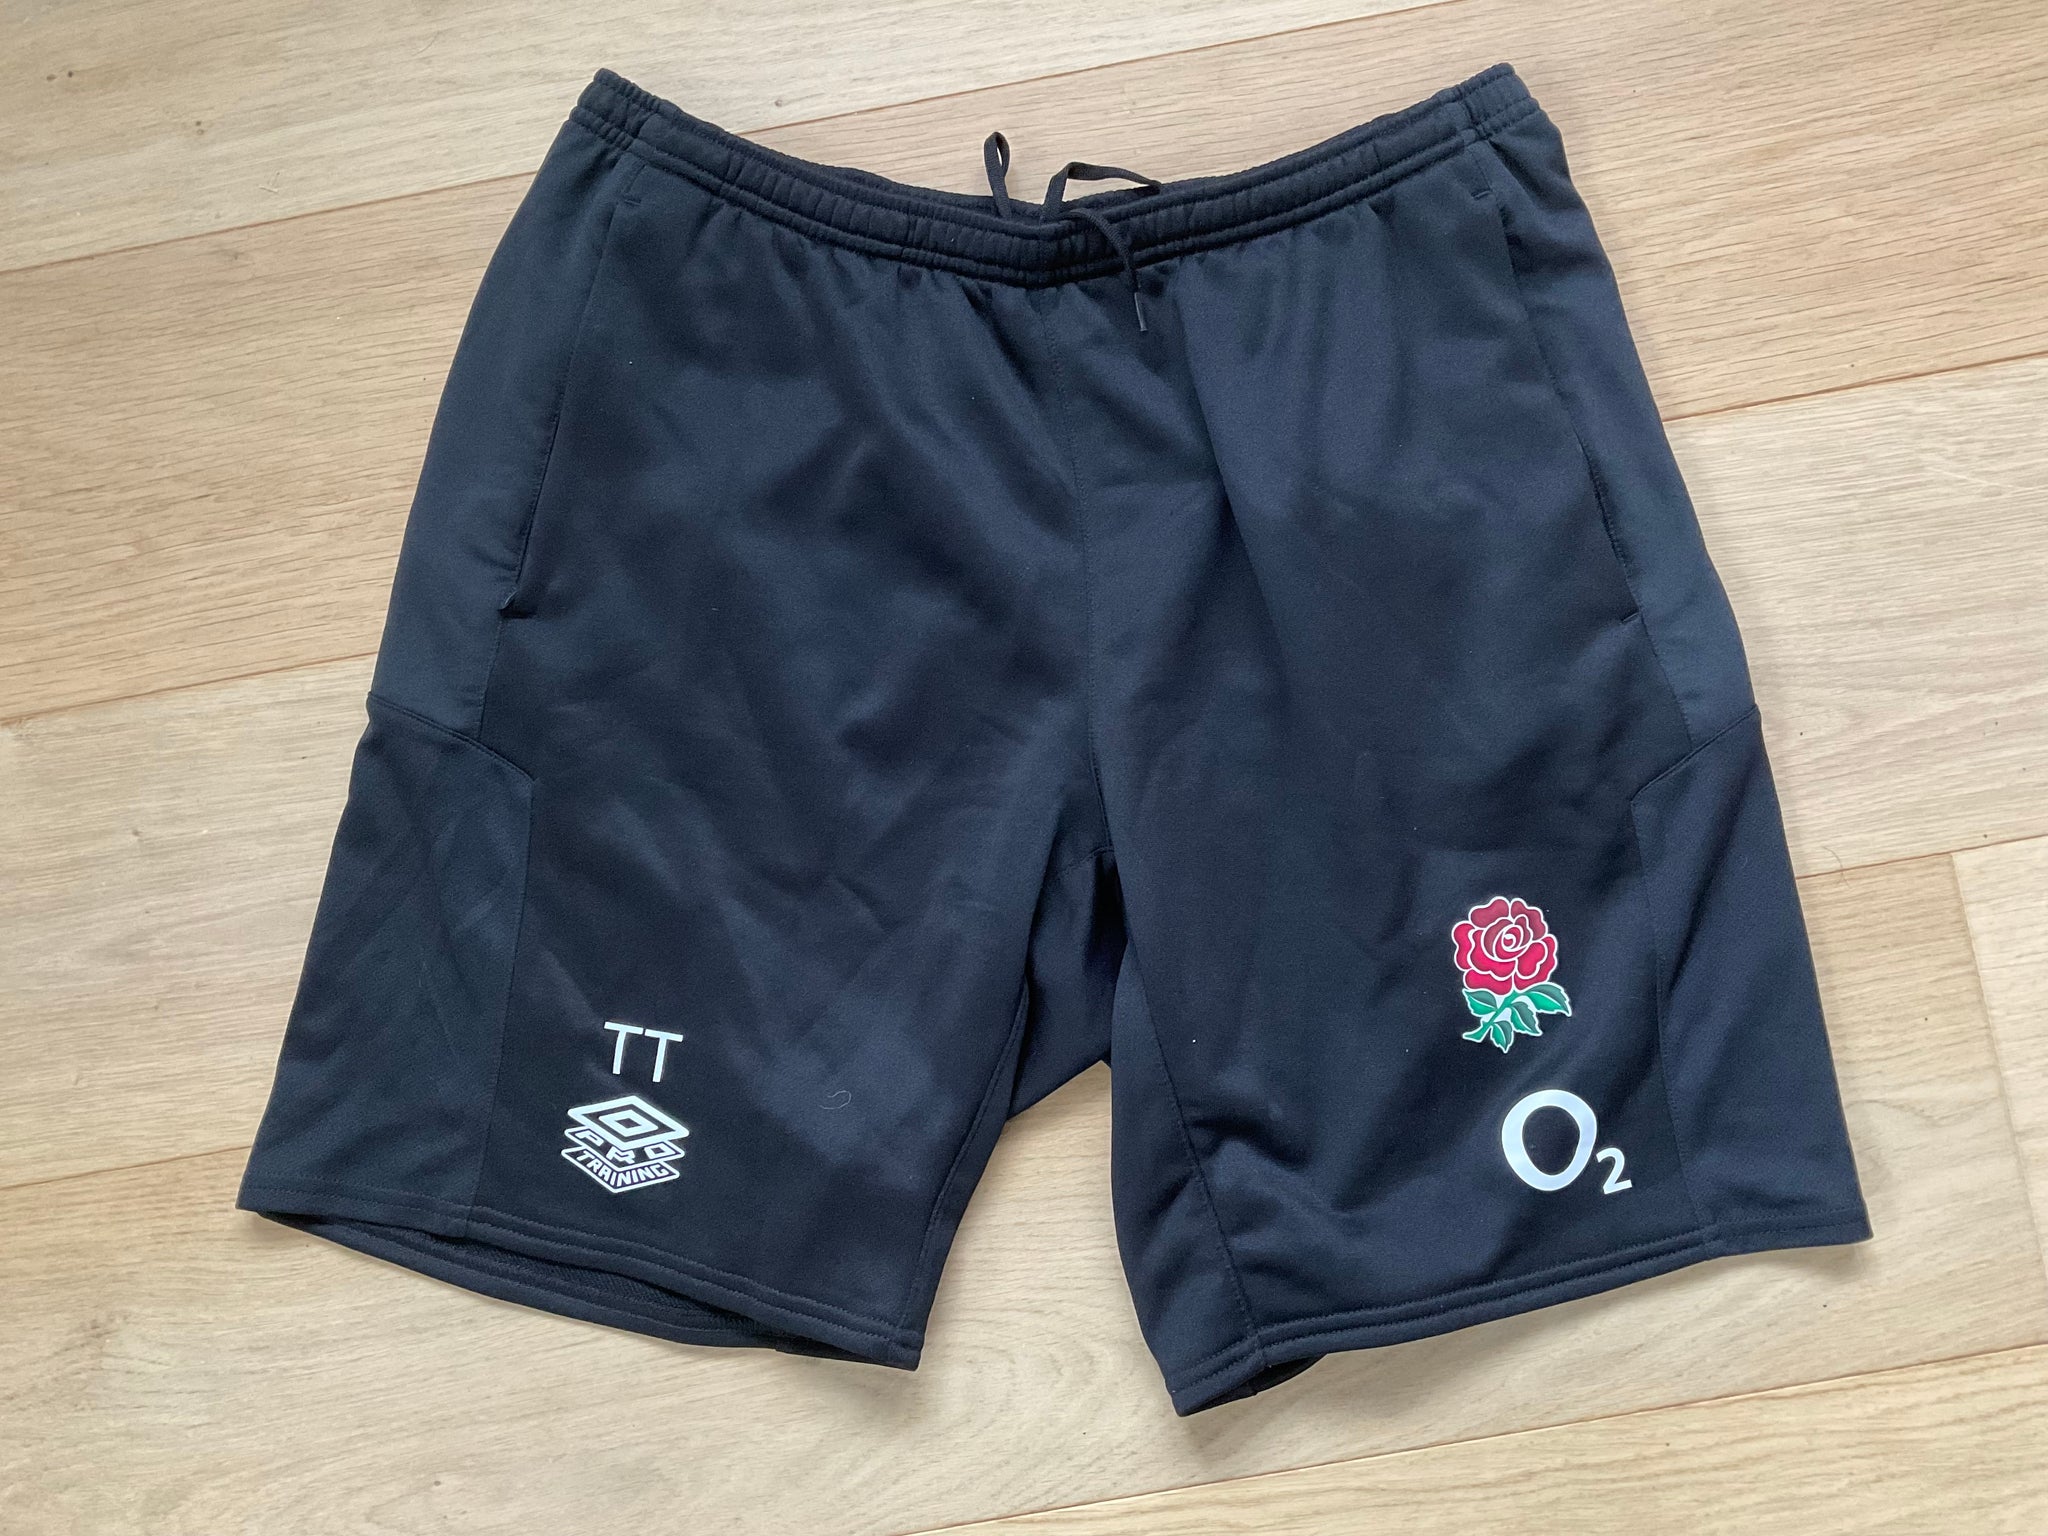 TT Initials - England Rugby Long Knit Shorts [Black]